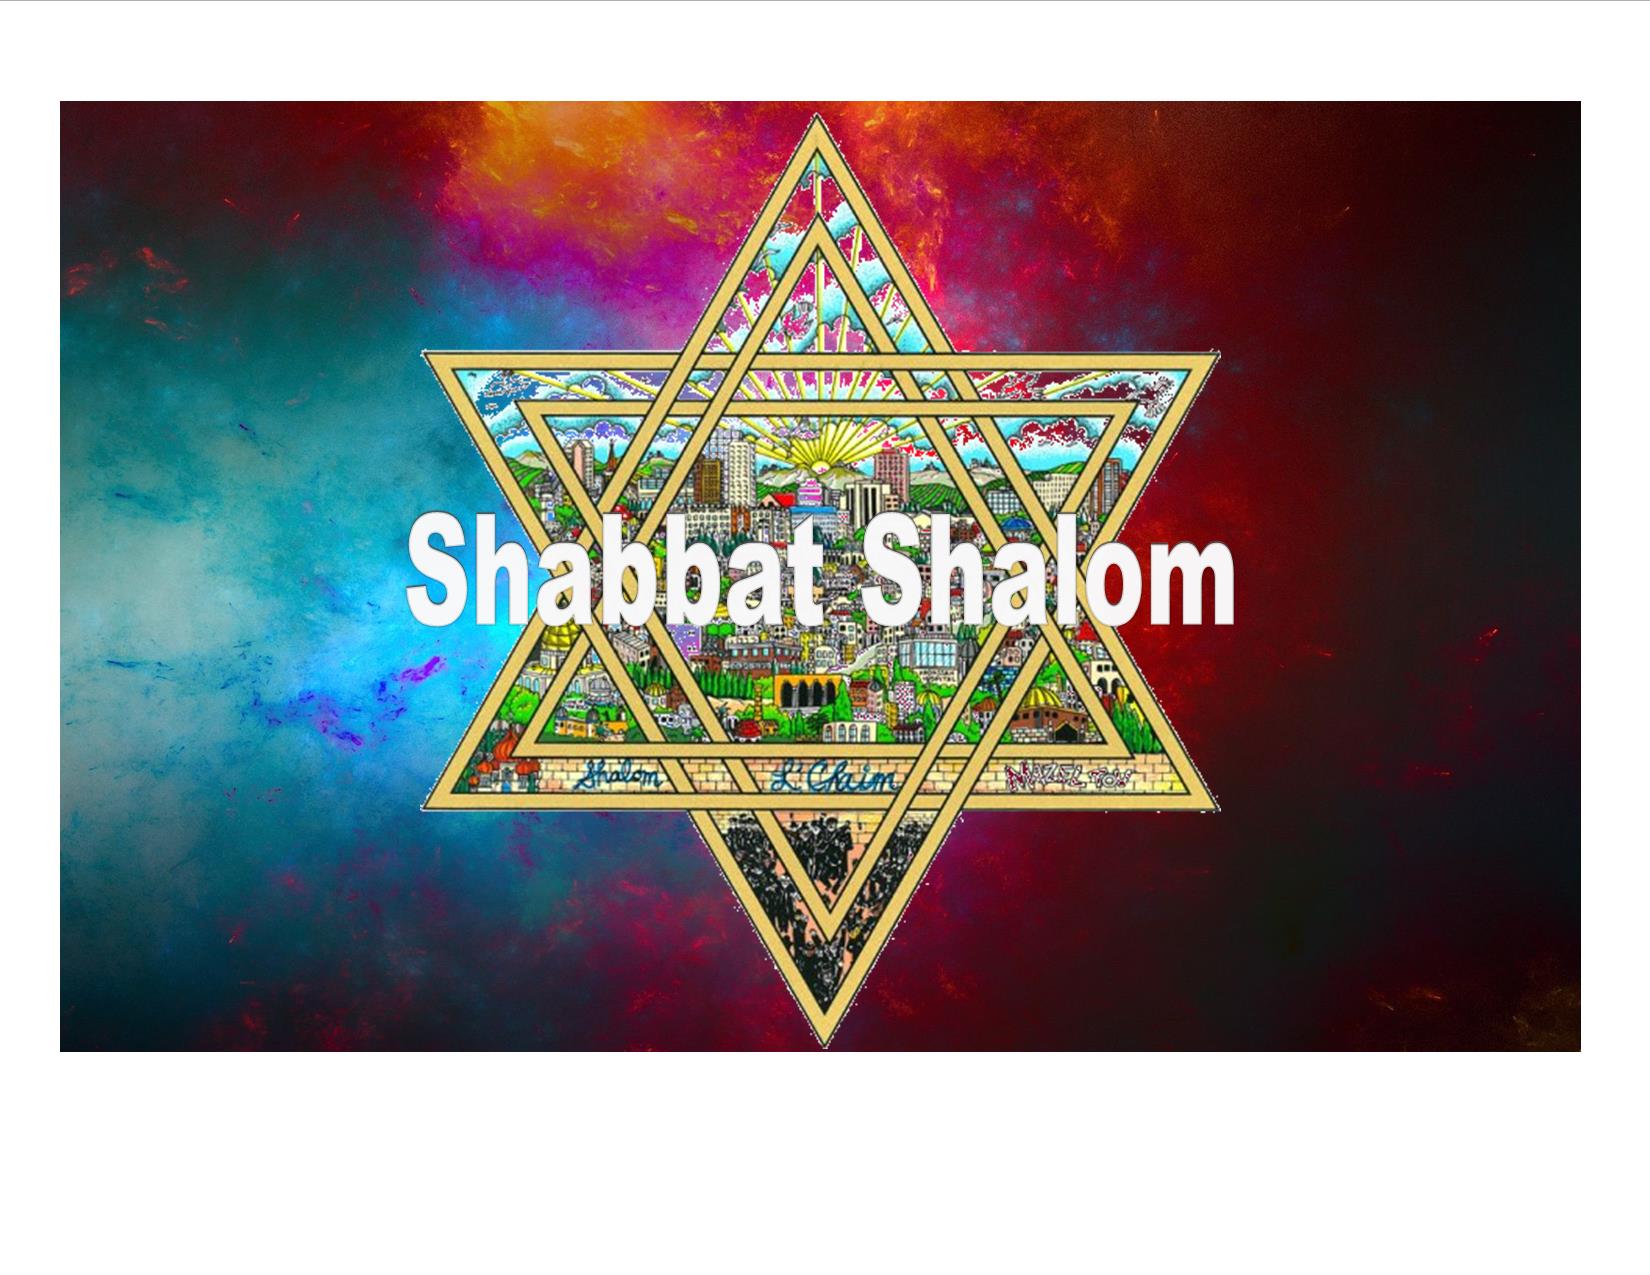 📖 A Oferenda de Shabbath, compiled by Abraham Israel Ben-Rosh